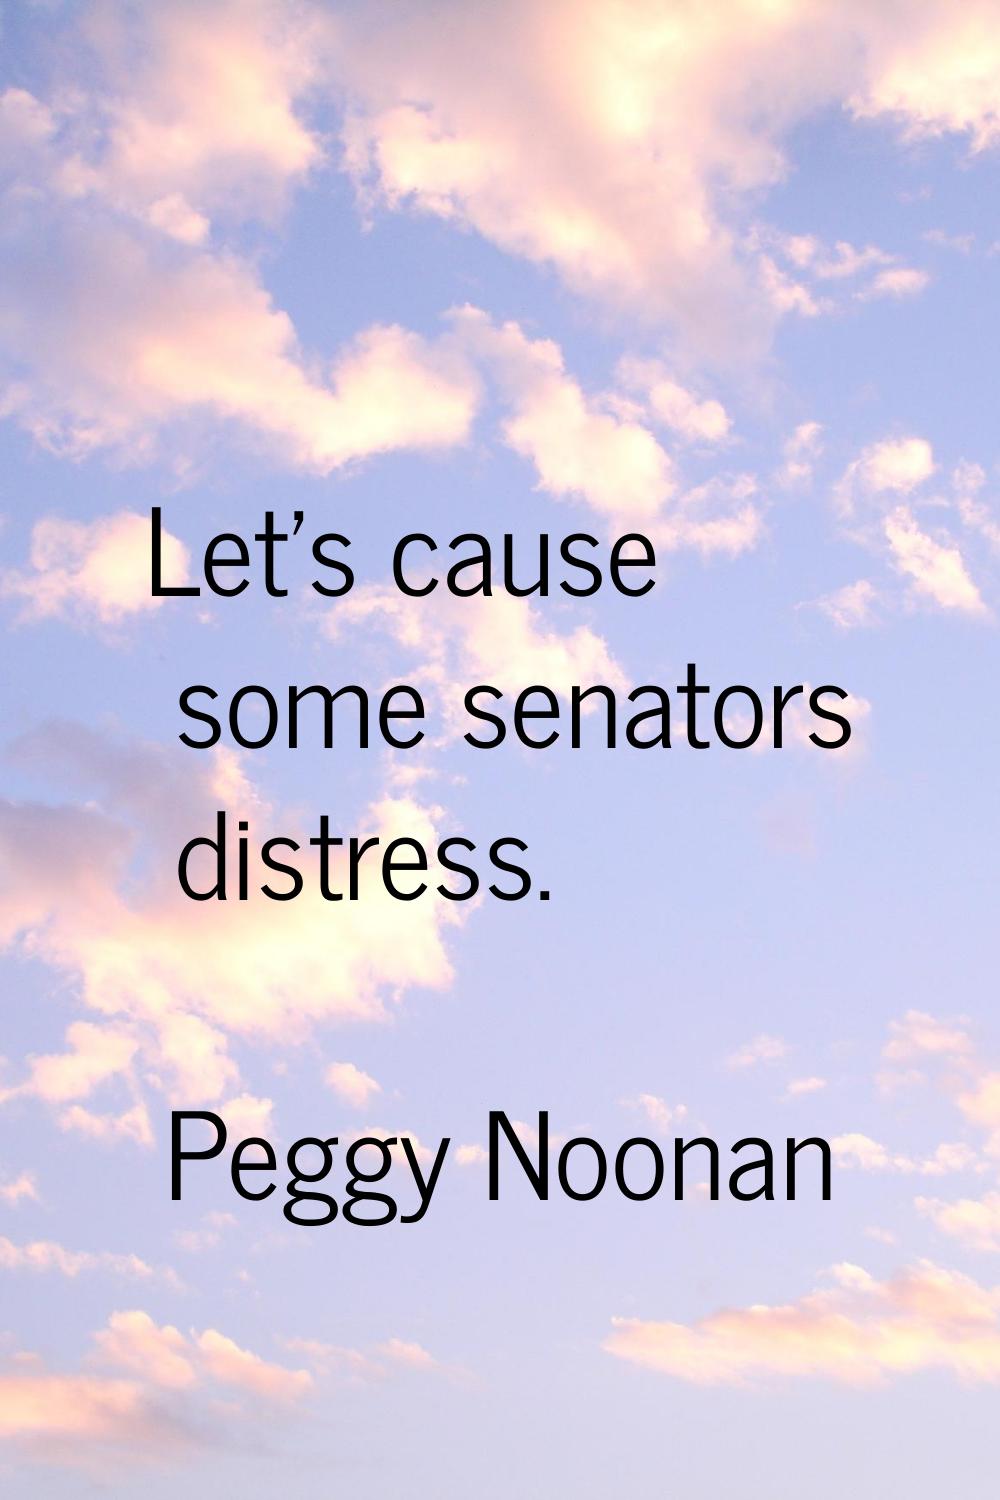 Let's cause some senators distress.